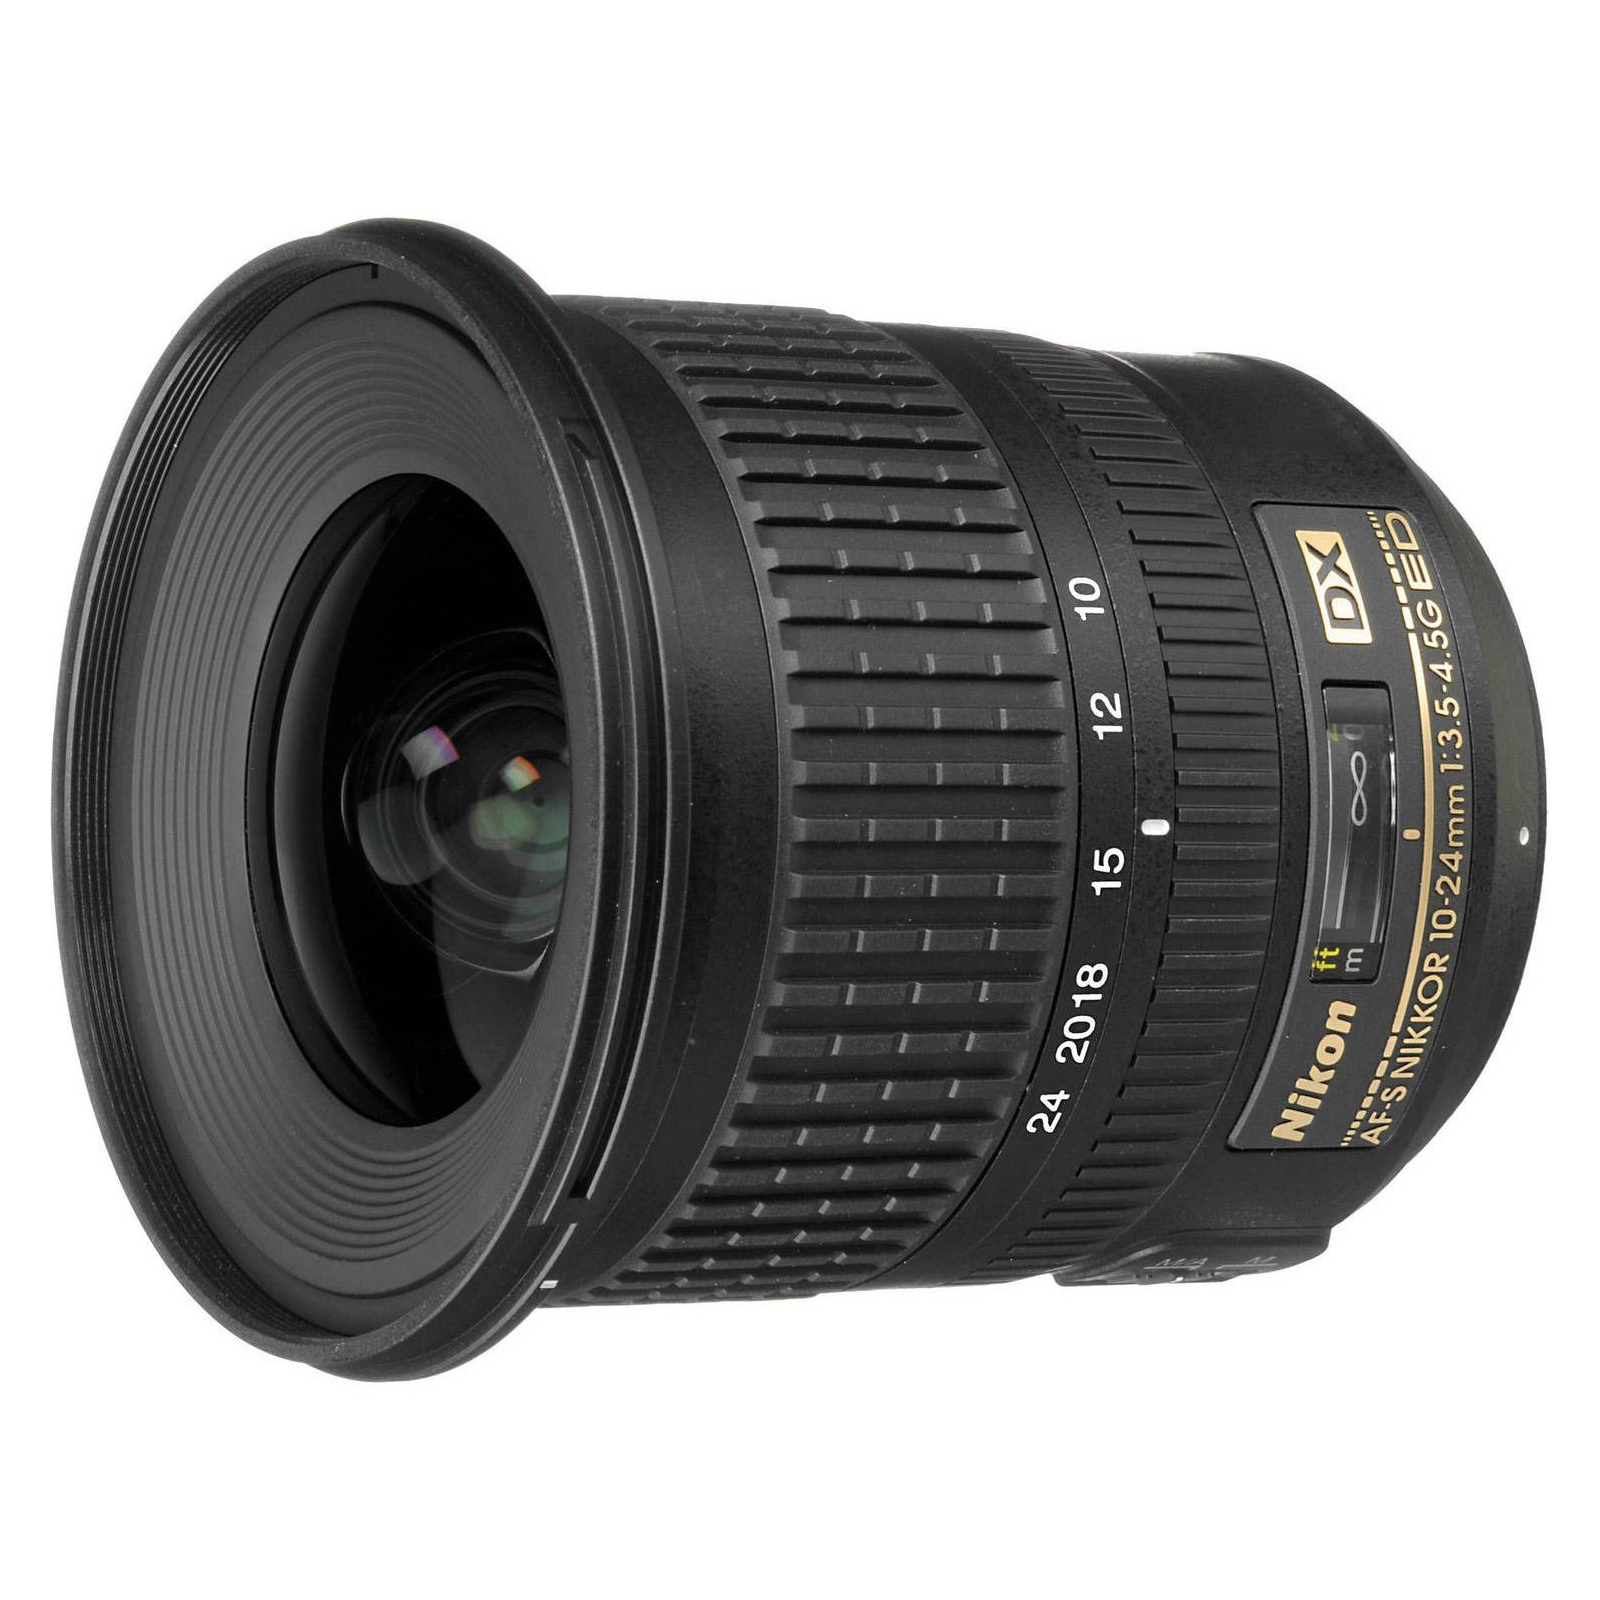 Объектив Nikon 10-24mm f/3.5-4.5G DX AF-S (JAA804DA)